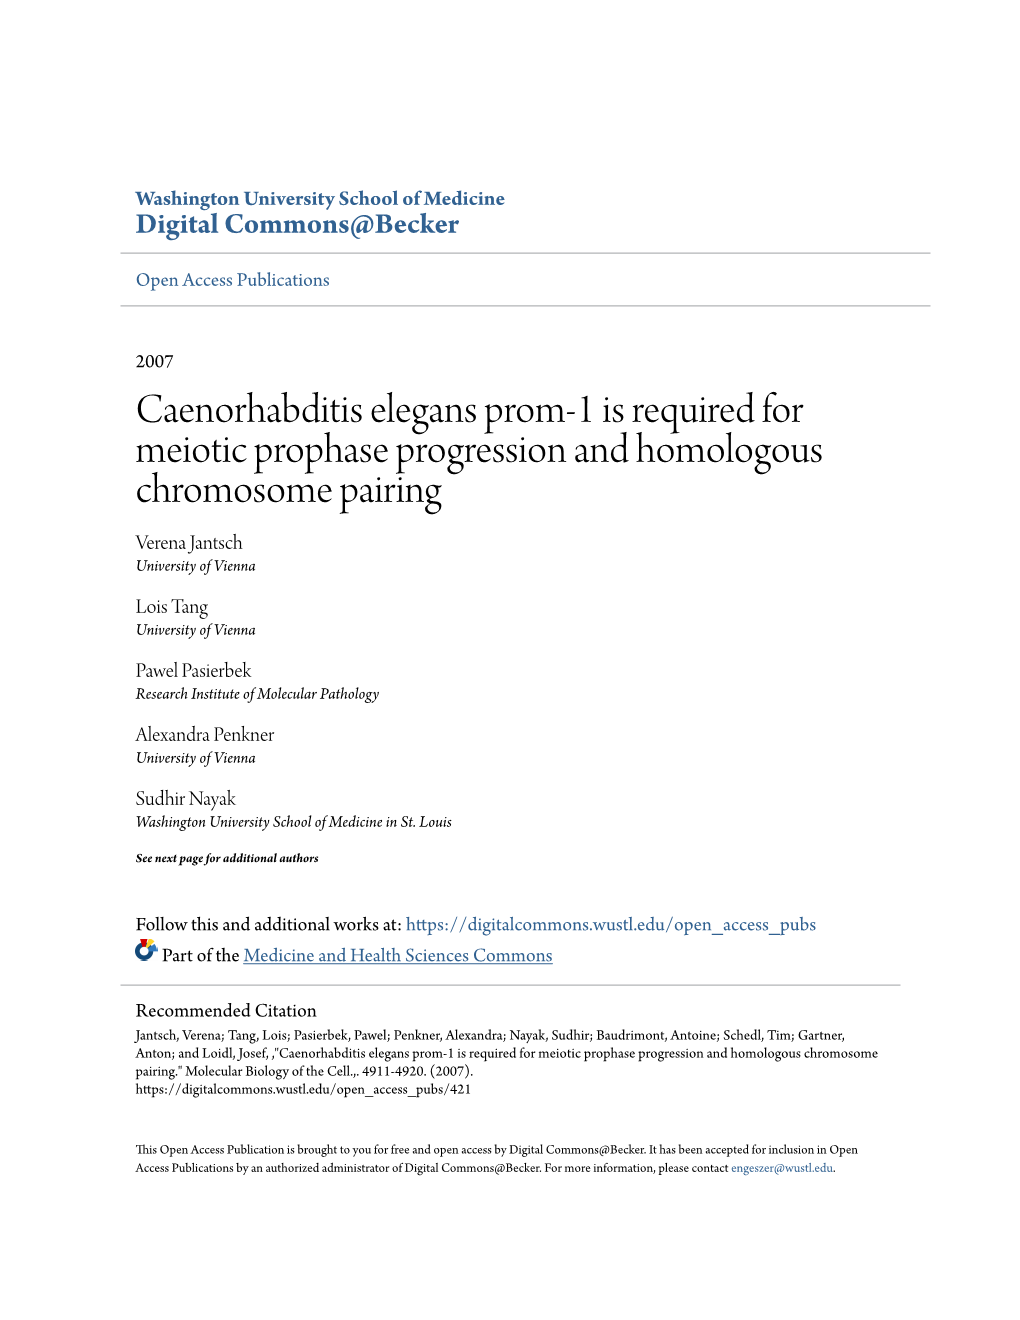 Caenorhabditis Elegans Prom-1 Is Required for Meiotic Prophase Progression and Homologous Chromosome Pairing Verena Jantsch University of Vienna